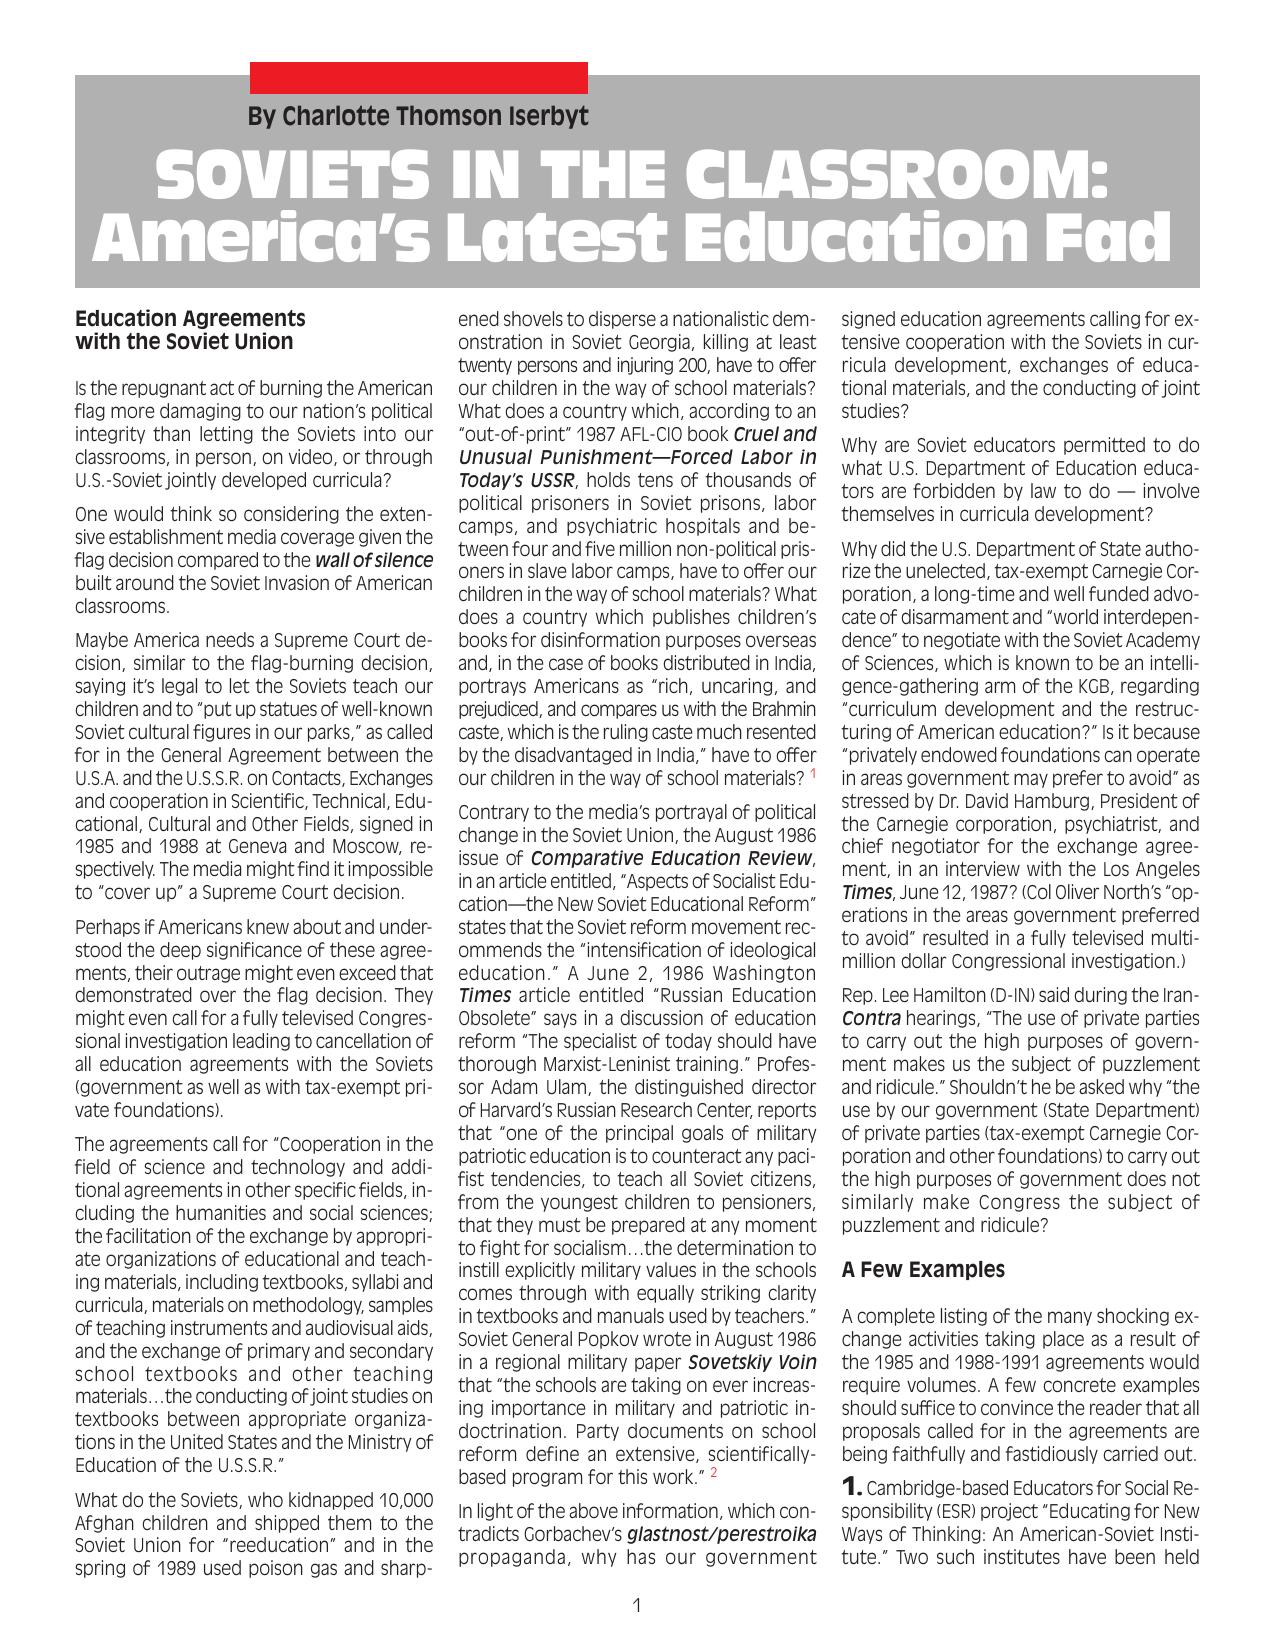 Soviets in the Classroom - America's Latest Education Fad